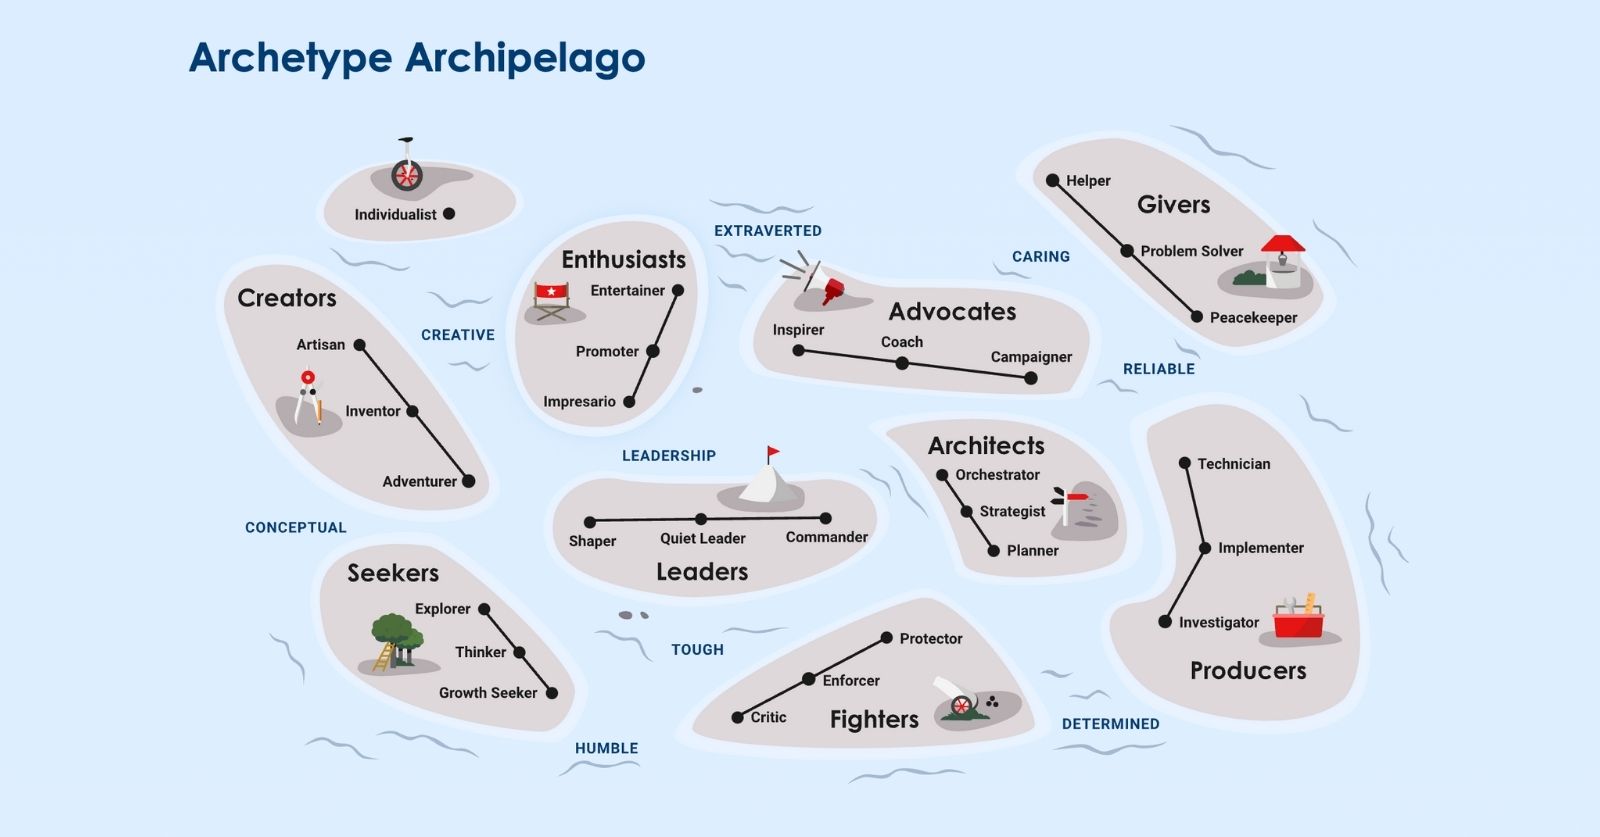 PrinciplesYou Archetype Archipelago - Mit freundlicher Genehmigung von Ray Dalio/PrinciplesYou.com